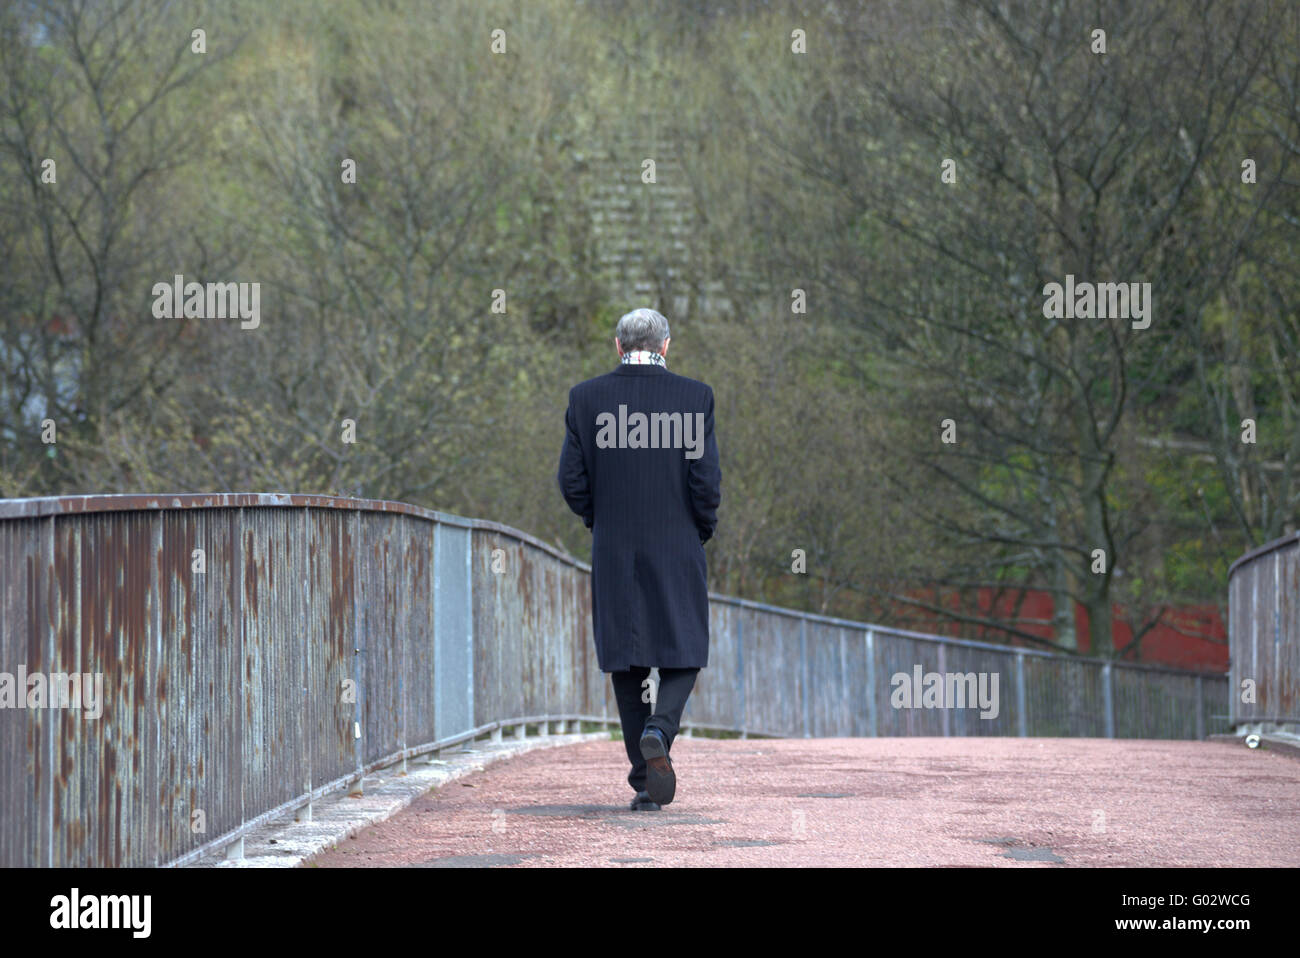 man in long  dark coat walking on path alone Stock Photo